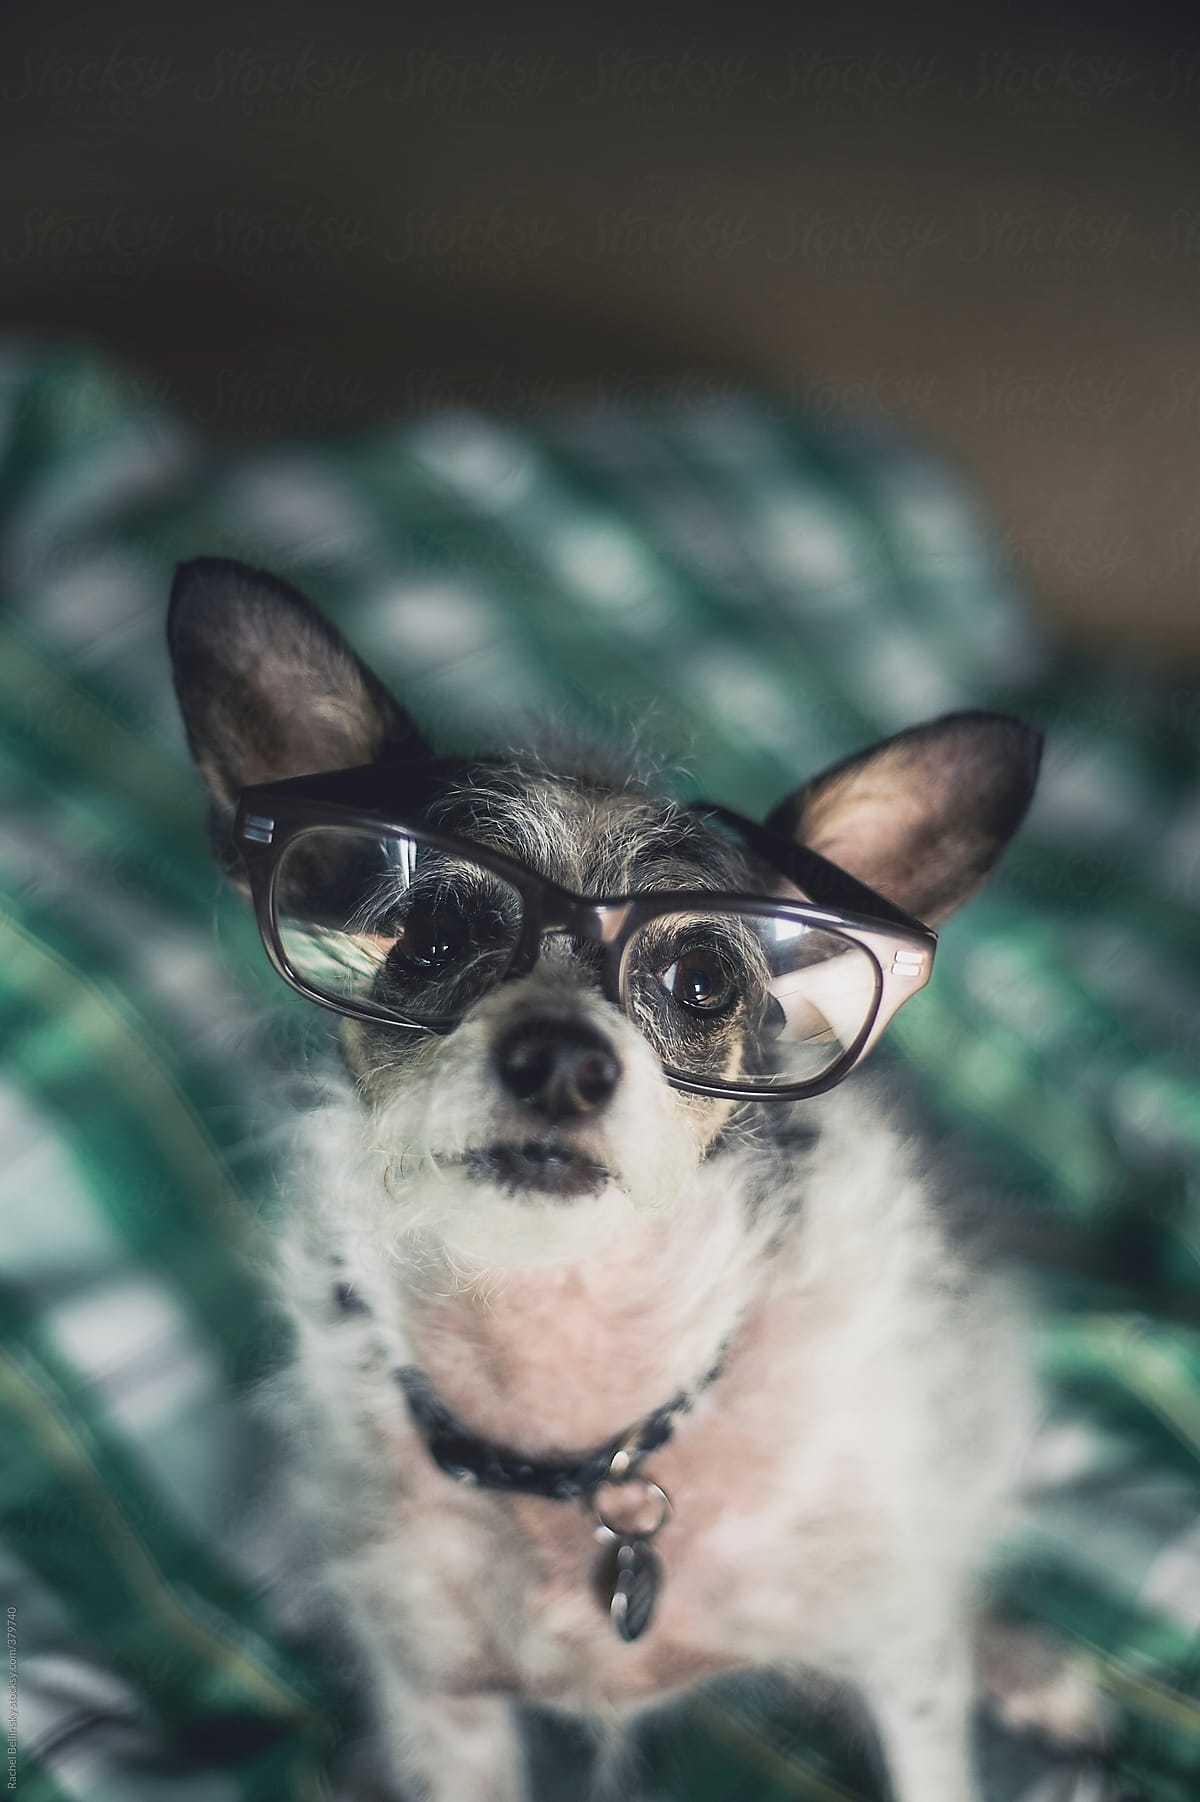 Cute dog wearing glasses